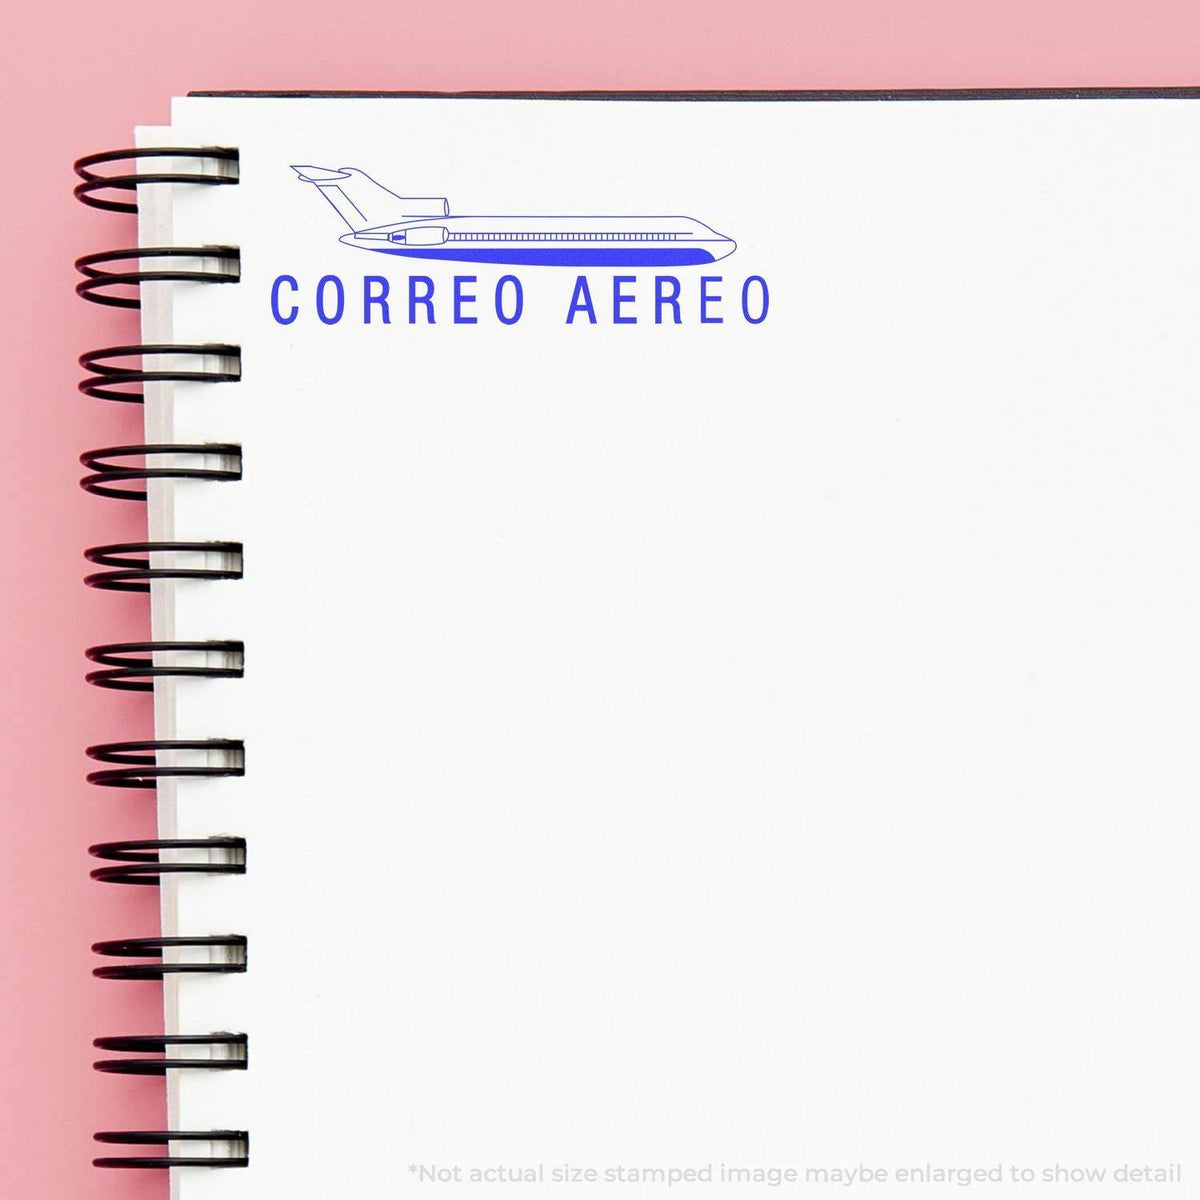 In Use Correo Aero Rubber Stamp Image